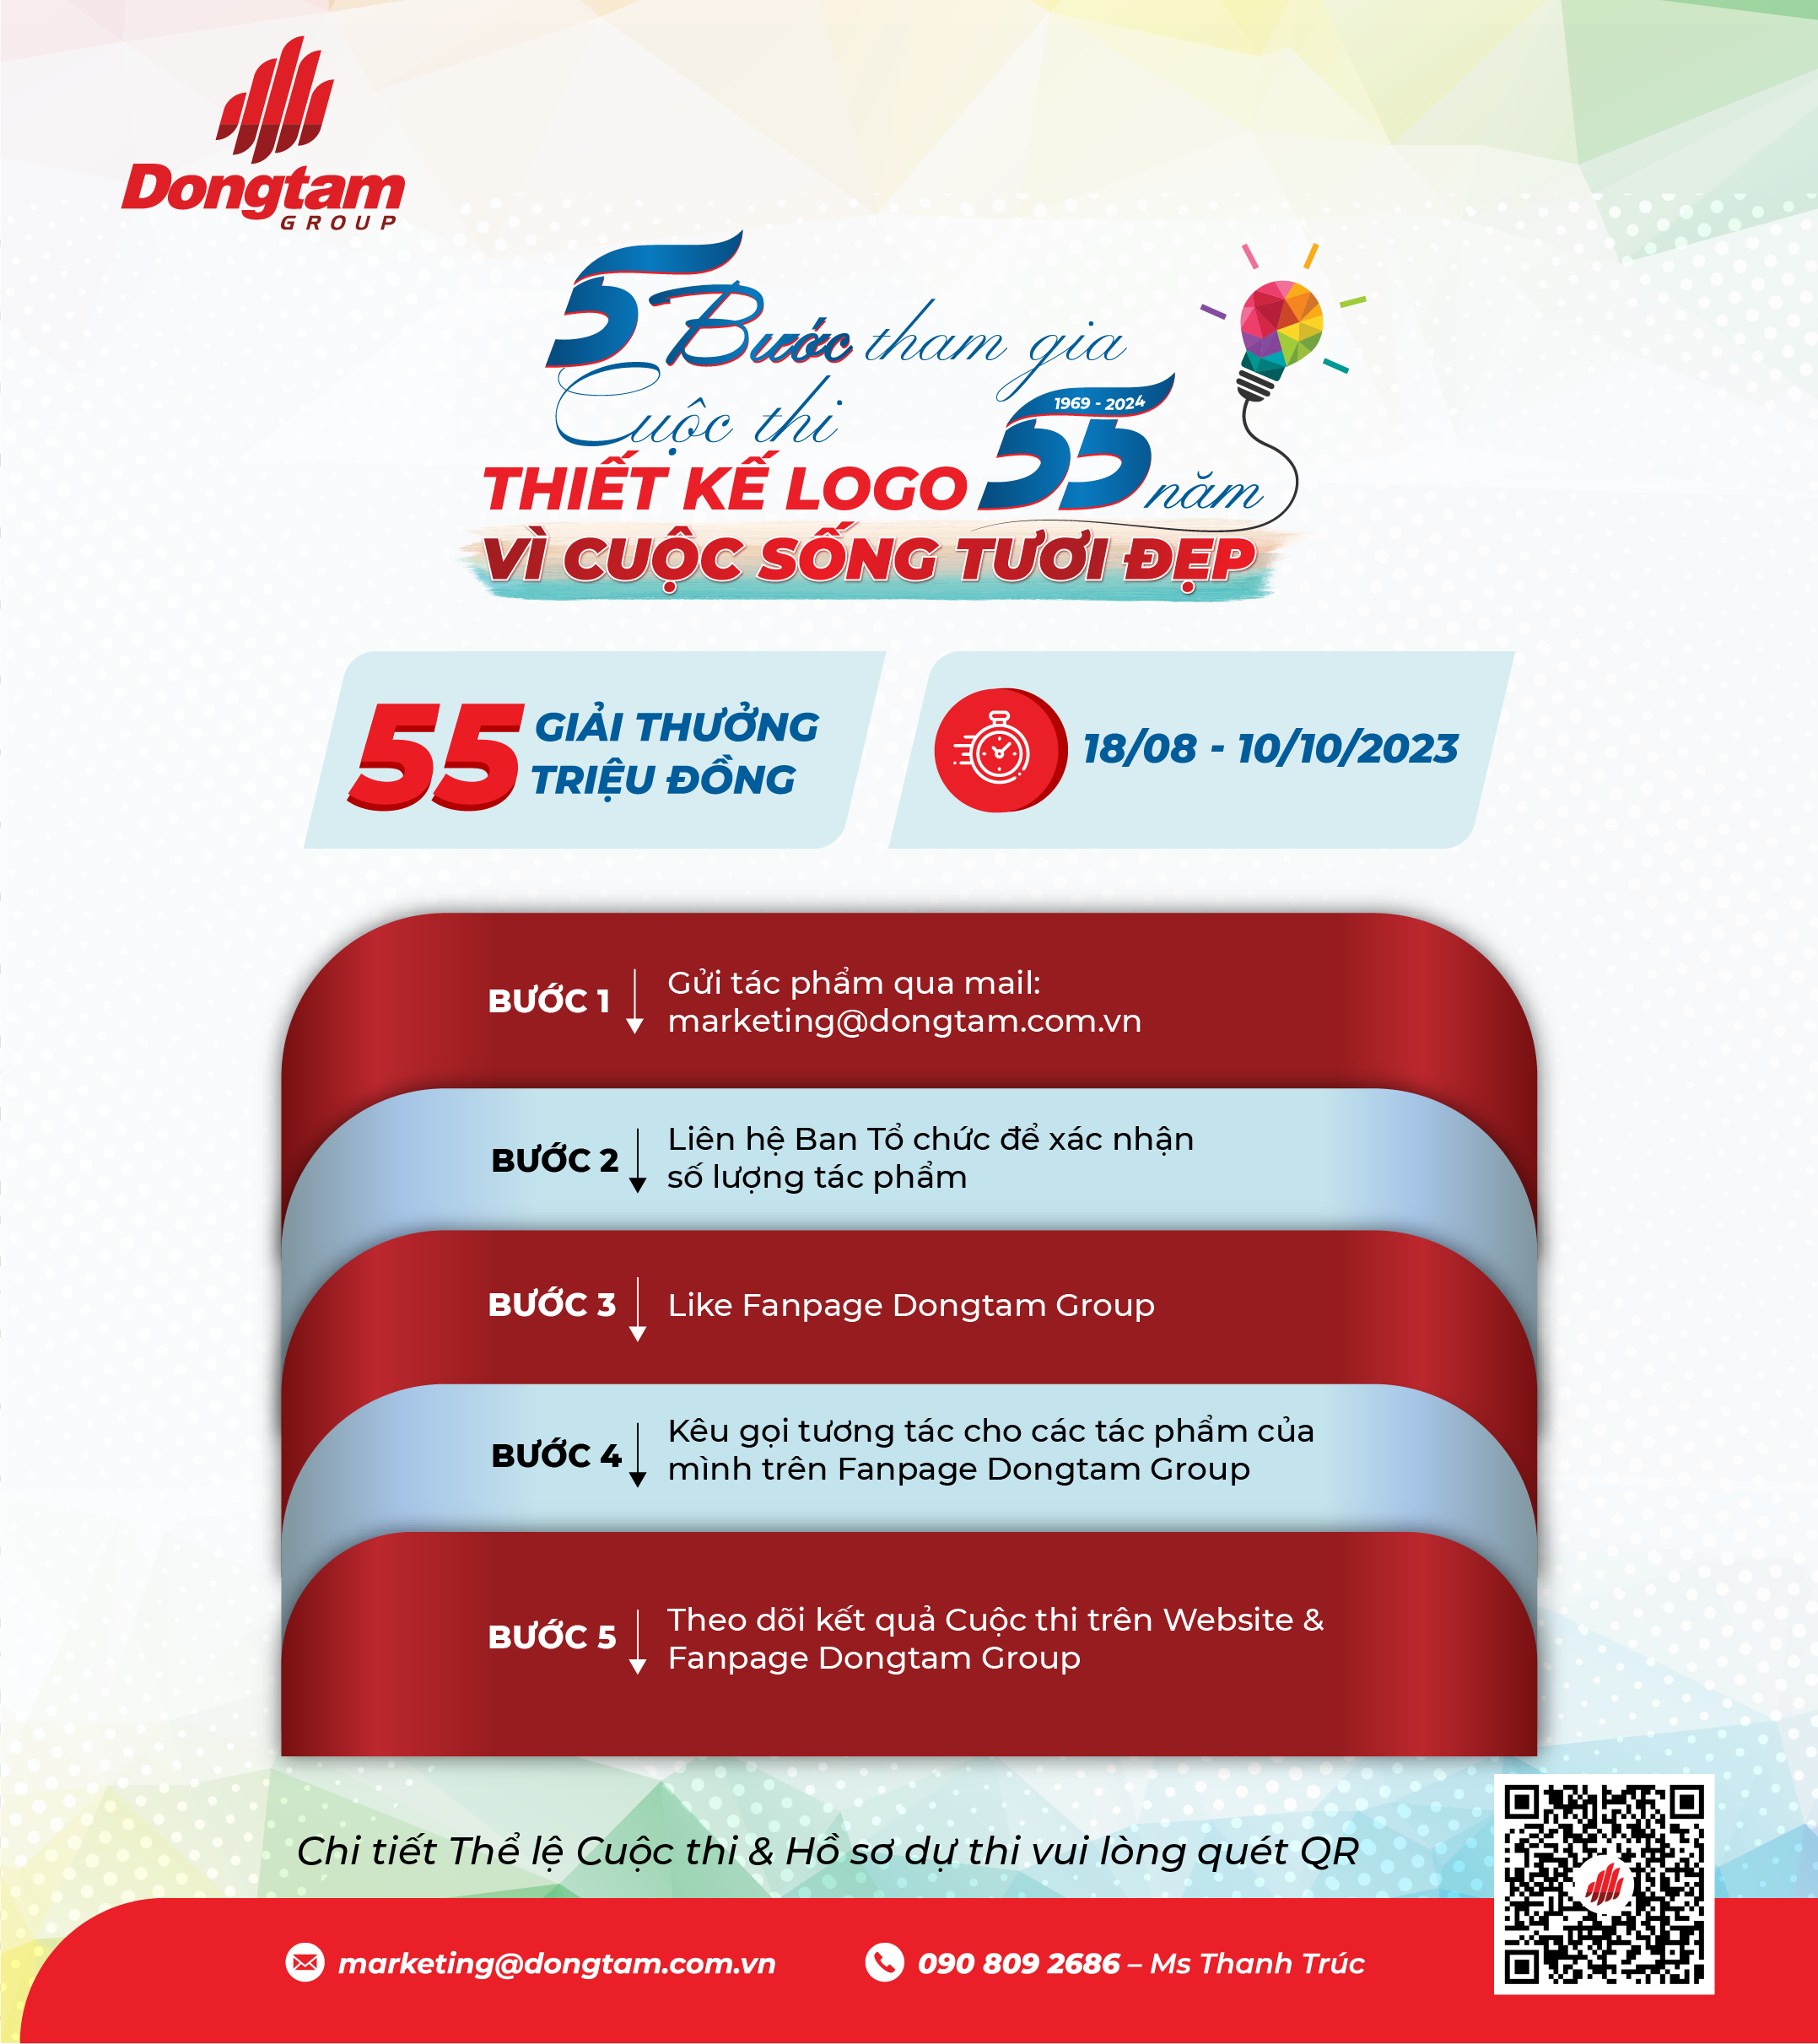 Cuoc thi thiet ke logo 55 nam Dongtam Group 5 buoc tham gia Hinh trong